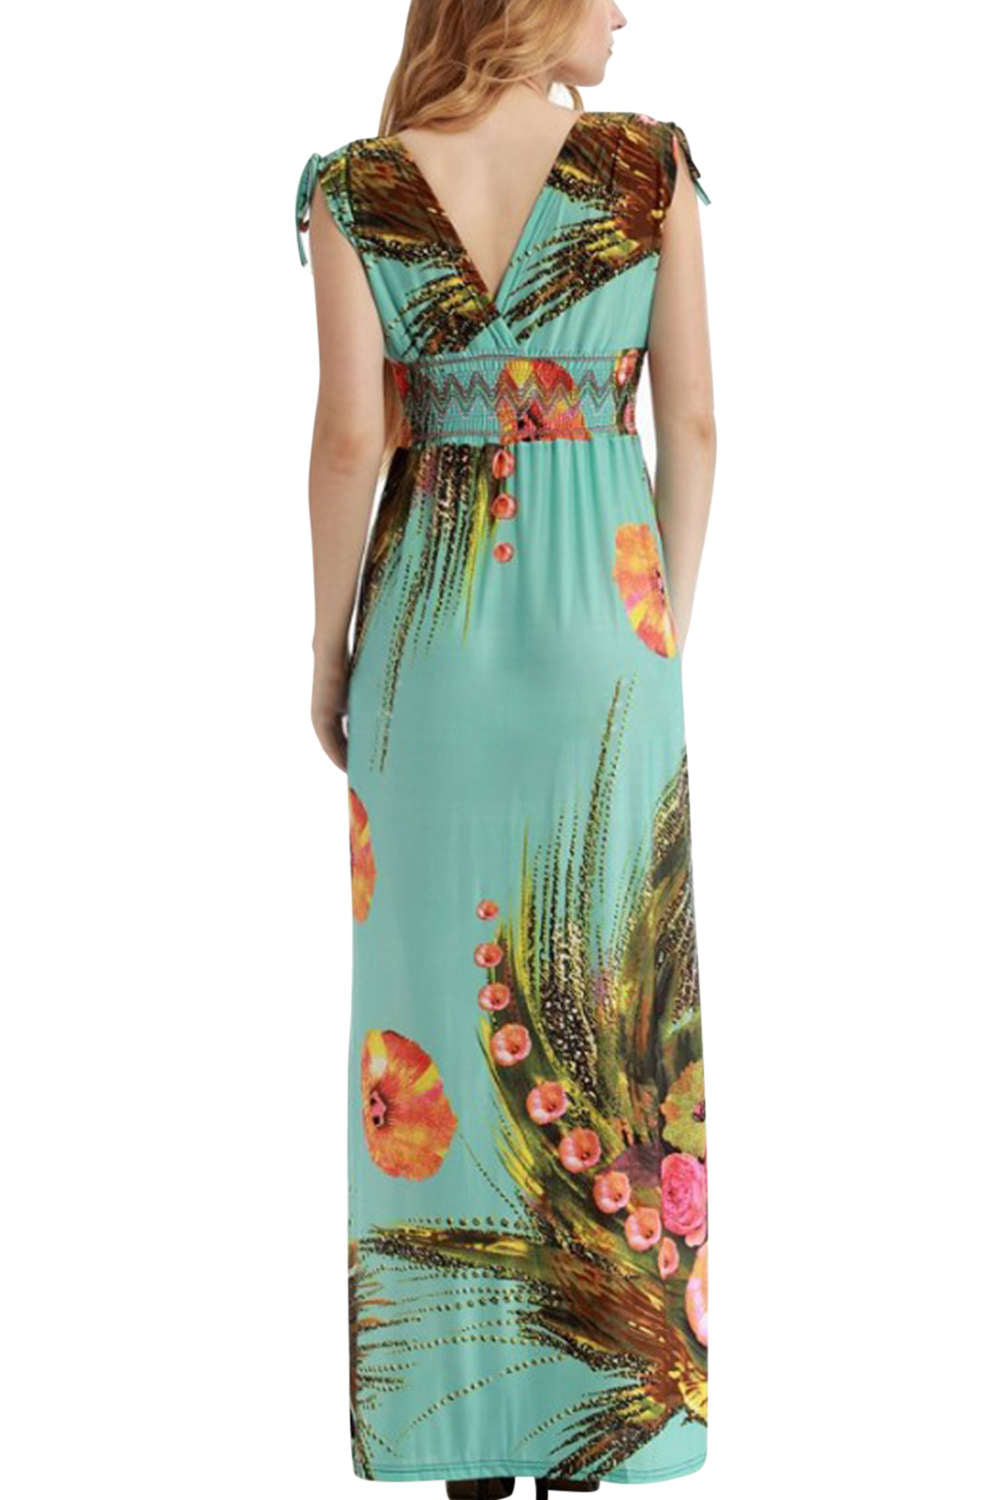 Iyasson Bohemian Floral Print V-neck Sleeveless Maxi Dress